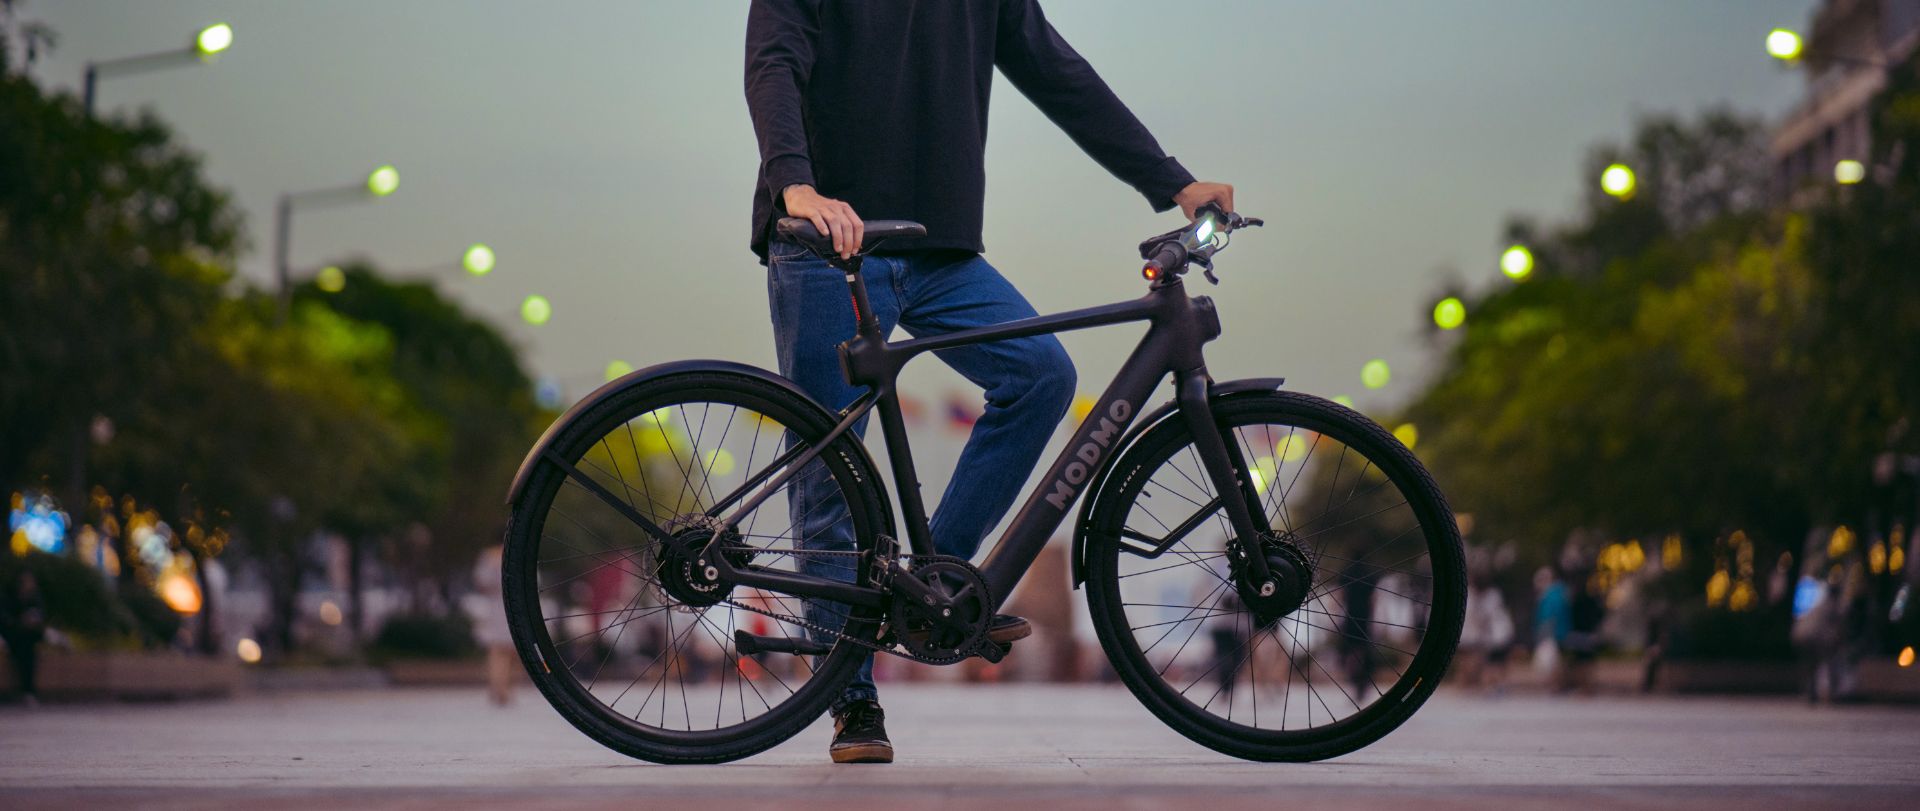 Modmo Saigon+ Electric Bicycle - RRP £2800 - Size M (Rider: 155-175cm) - Image 16 of 16